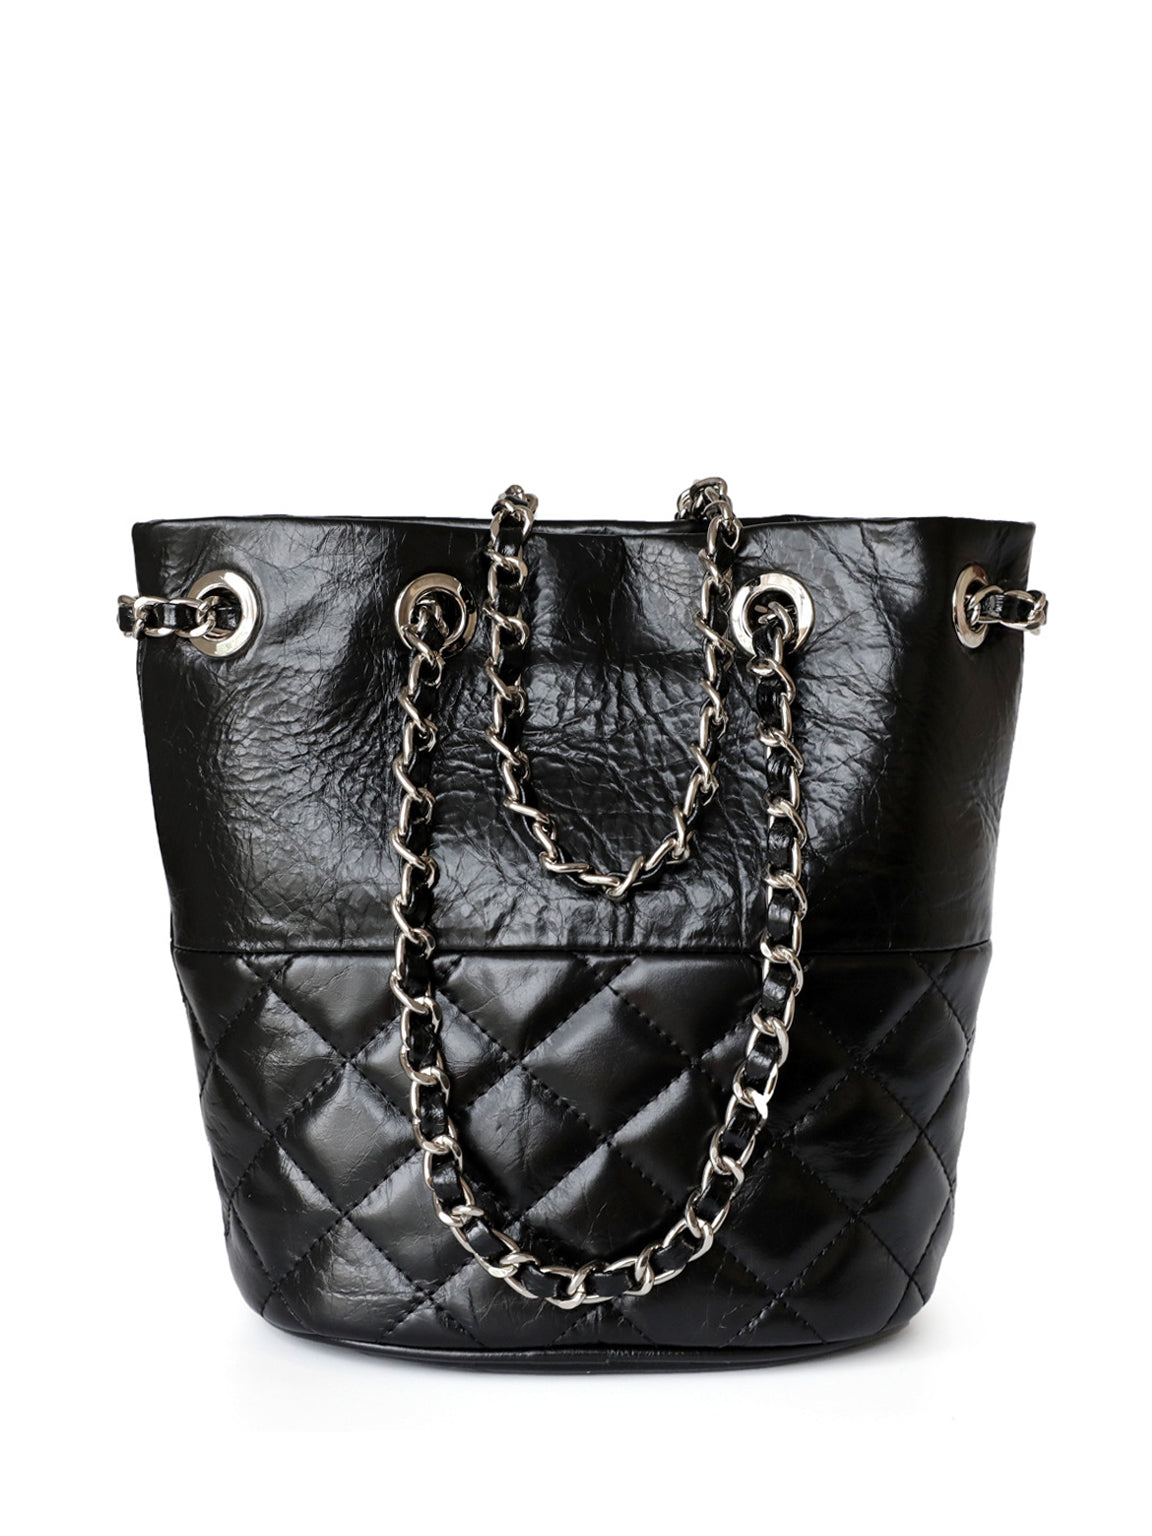 Used Multicolor Chanel Gabrielle Drawstring Handbag Blue Leather